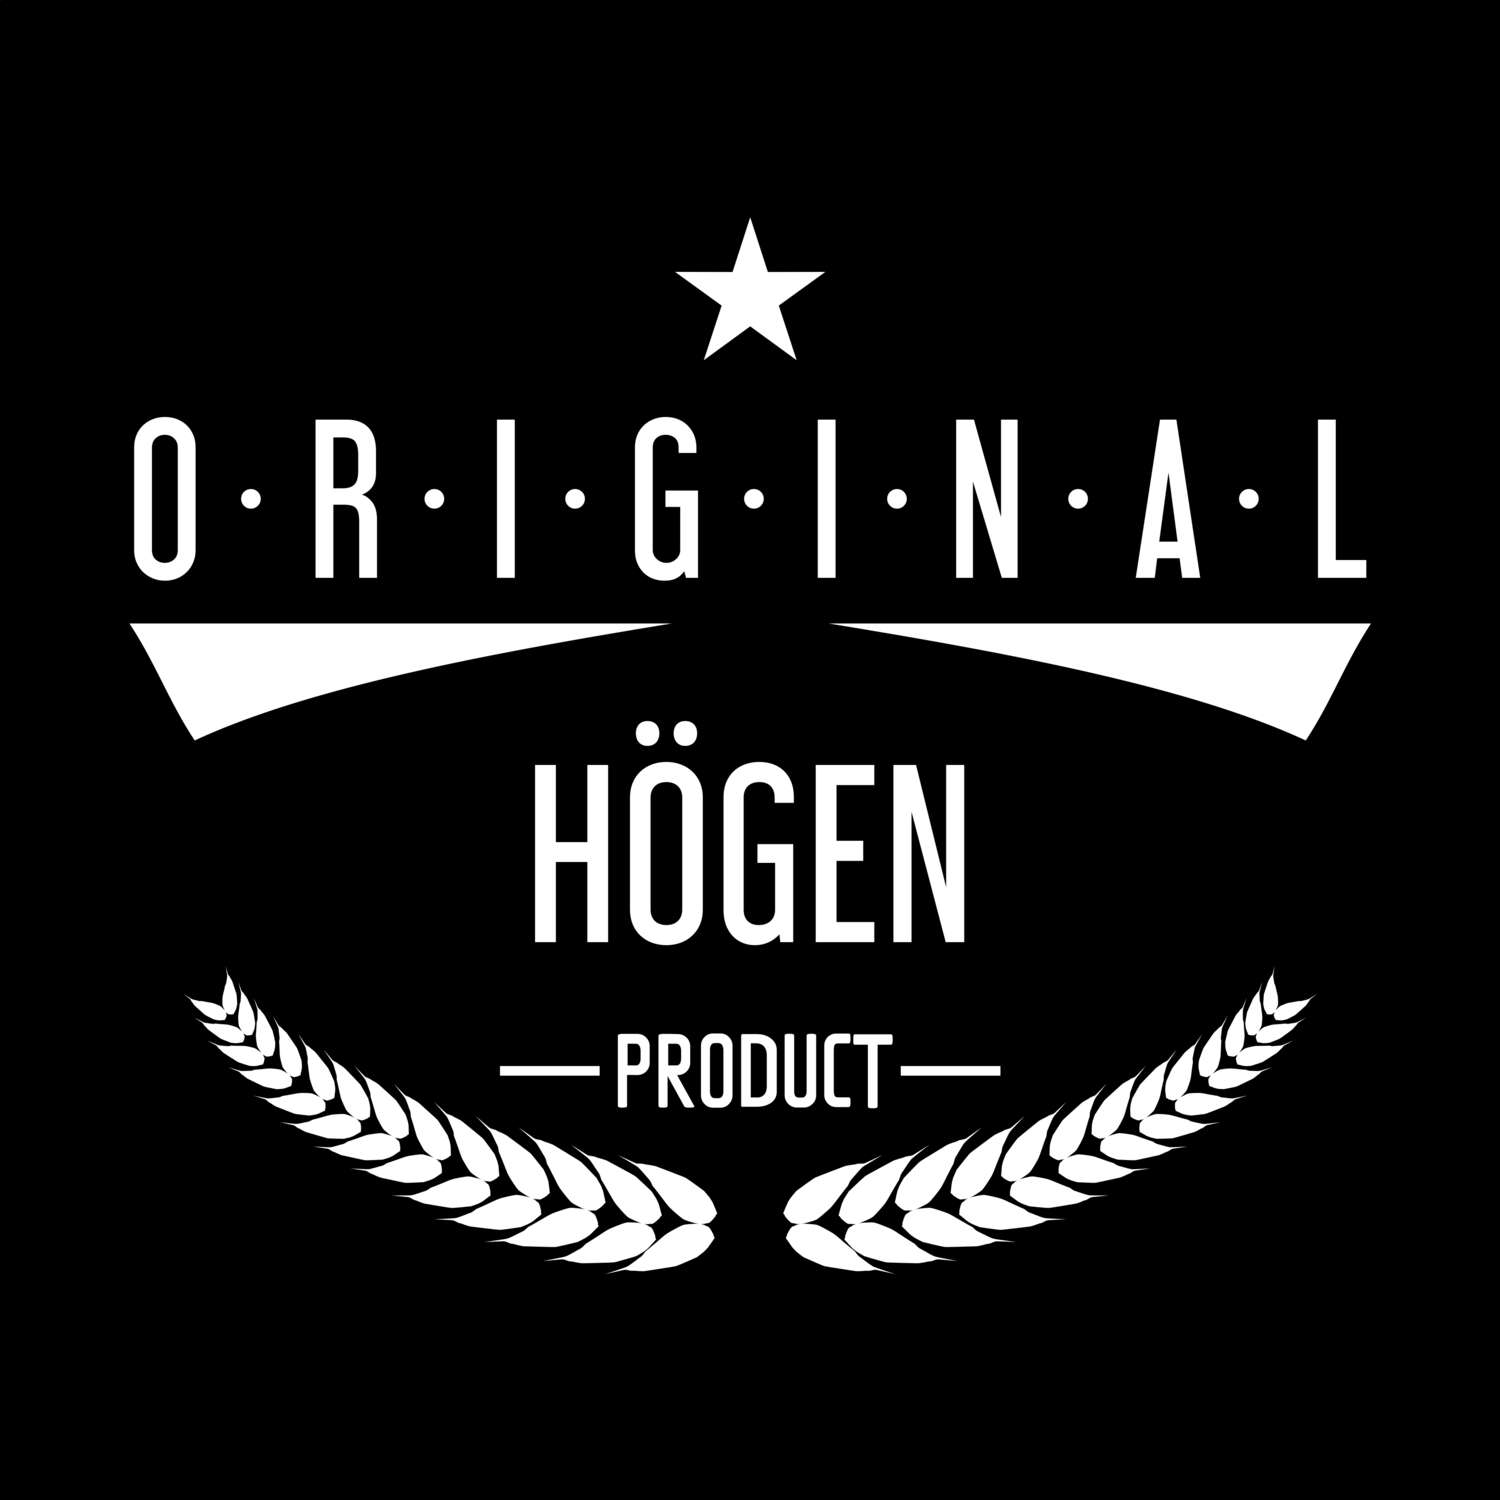 Högen T-Shirt »Original Product«